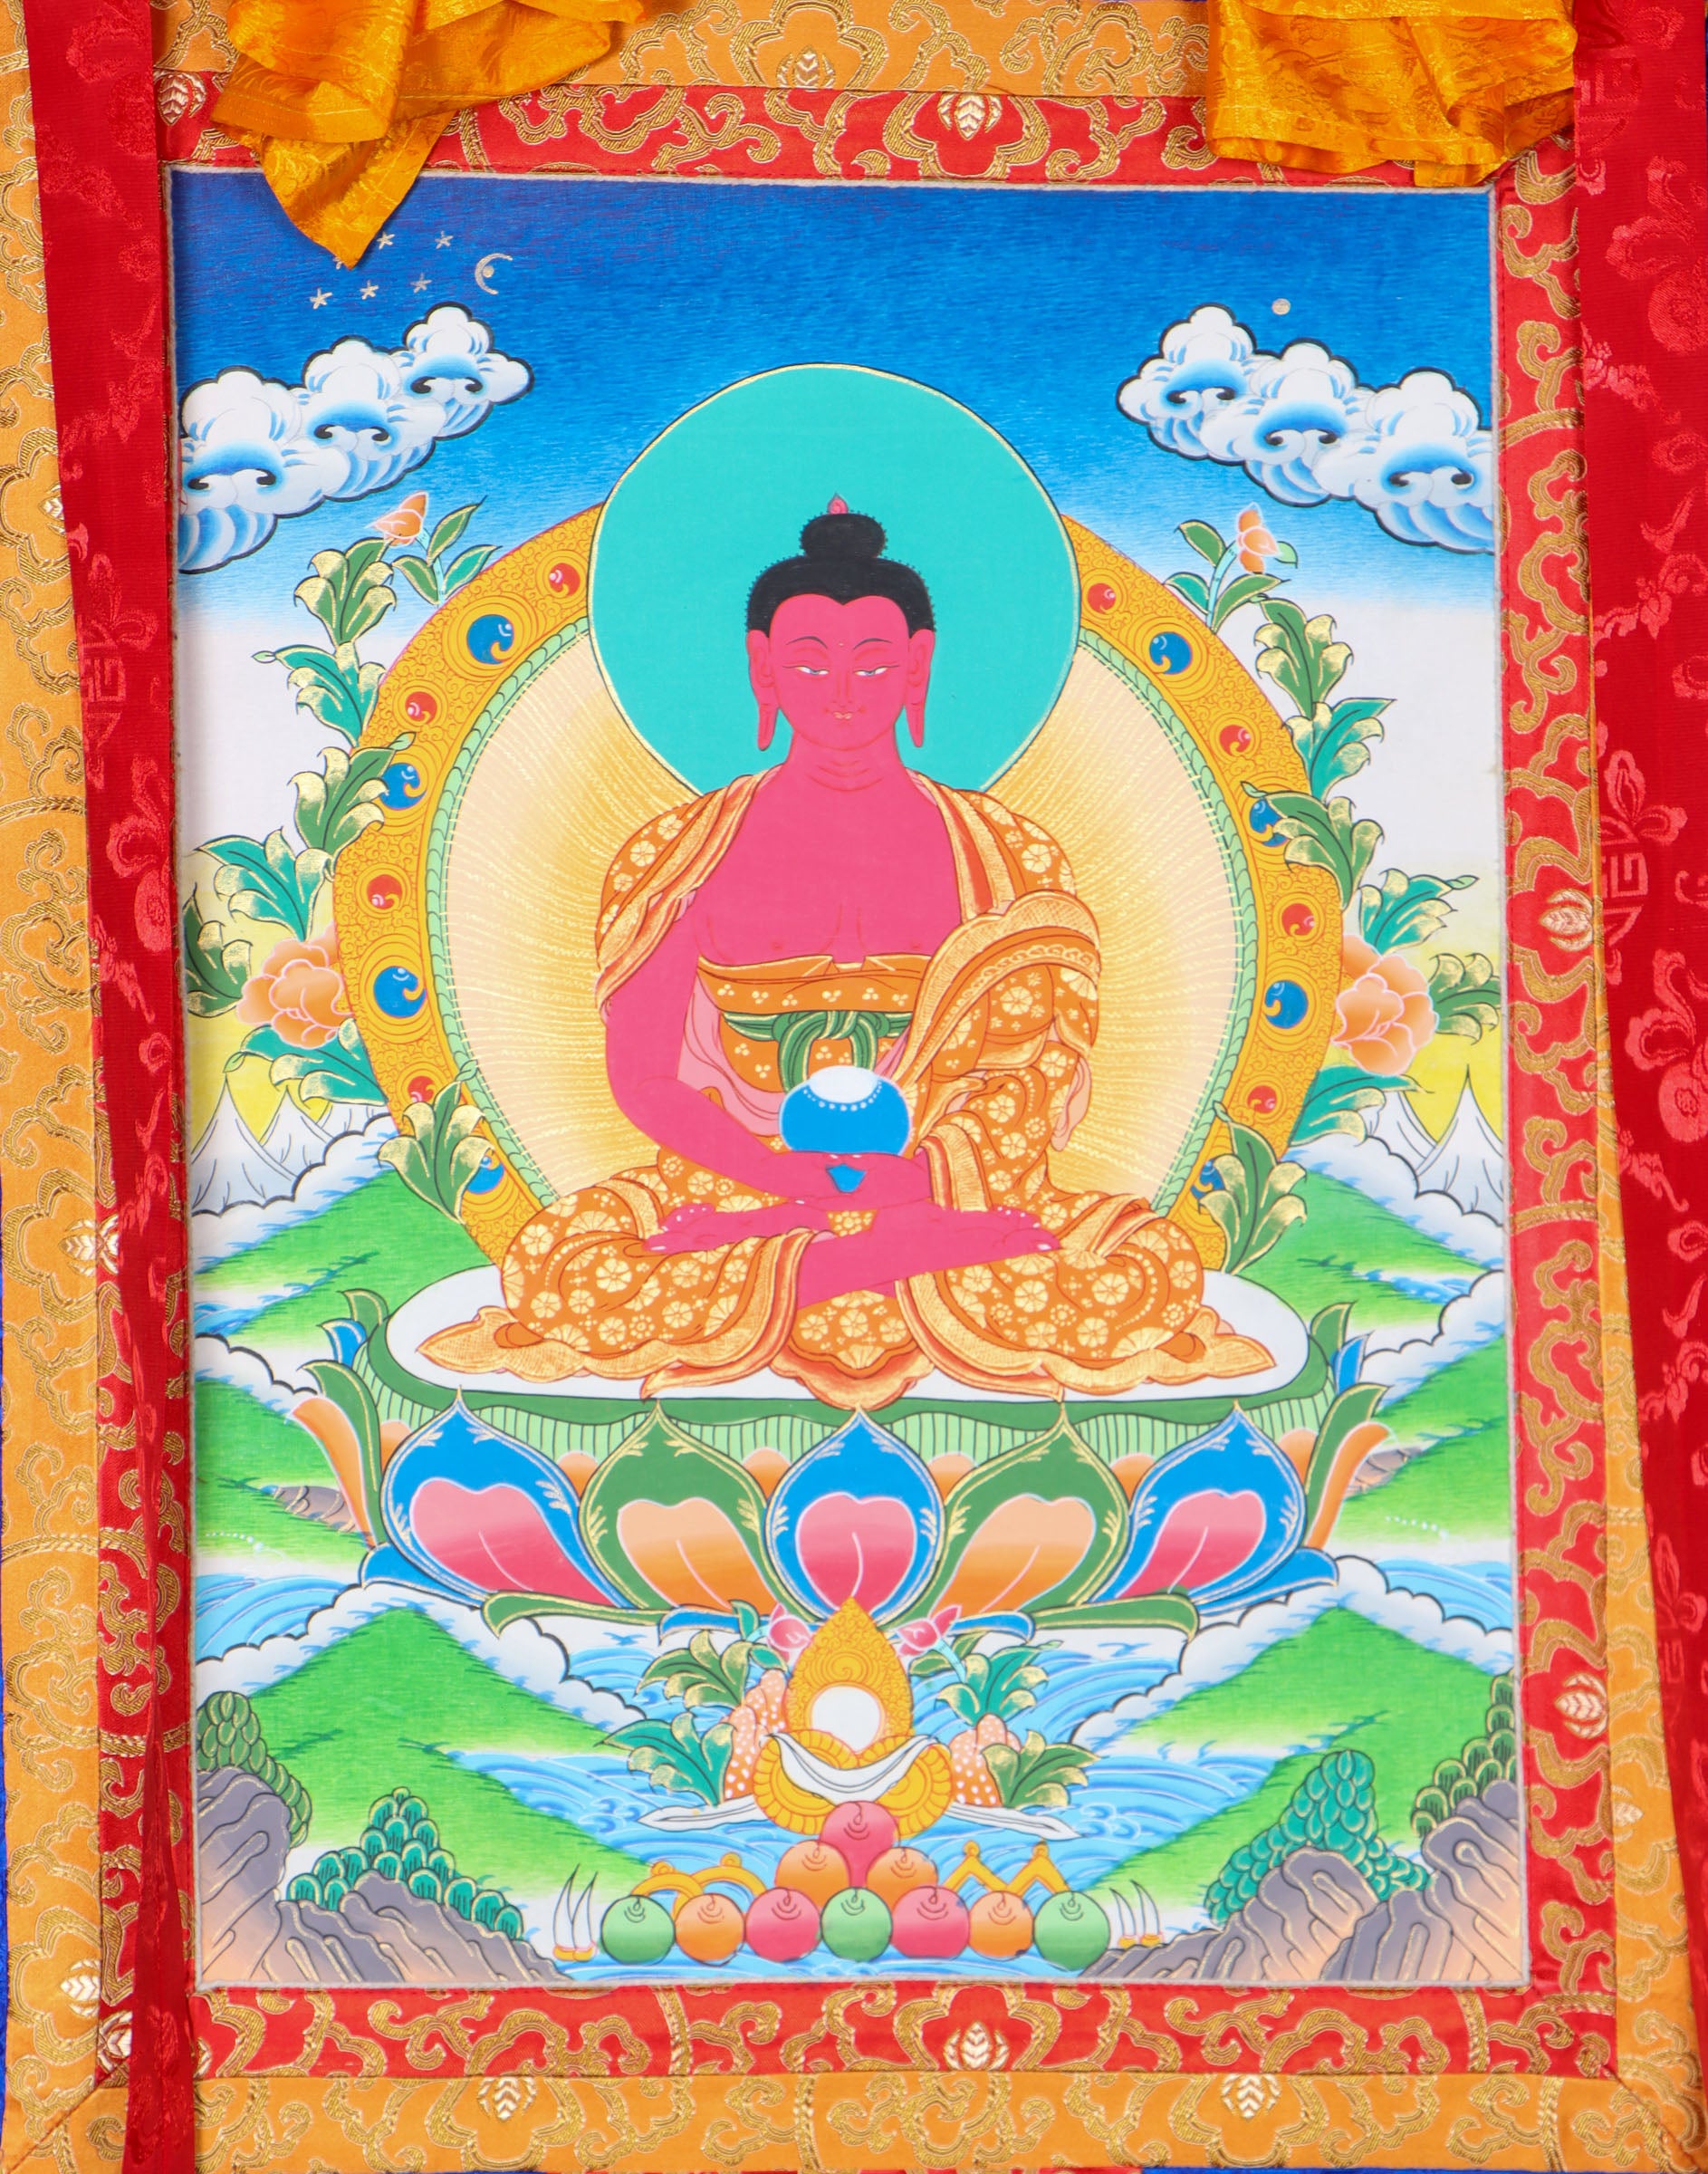  Amitabha Brocade Thangka painting for wisdom and enlightment.